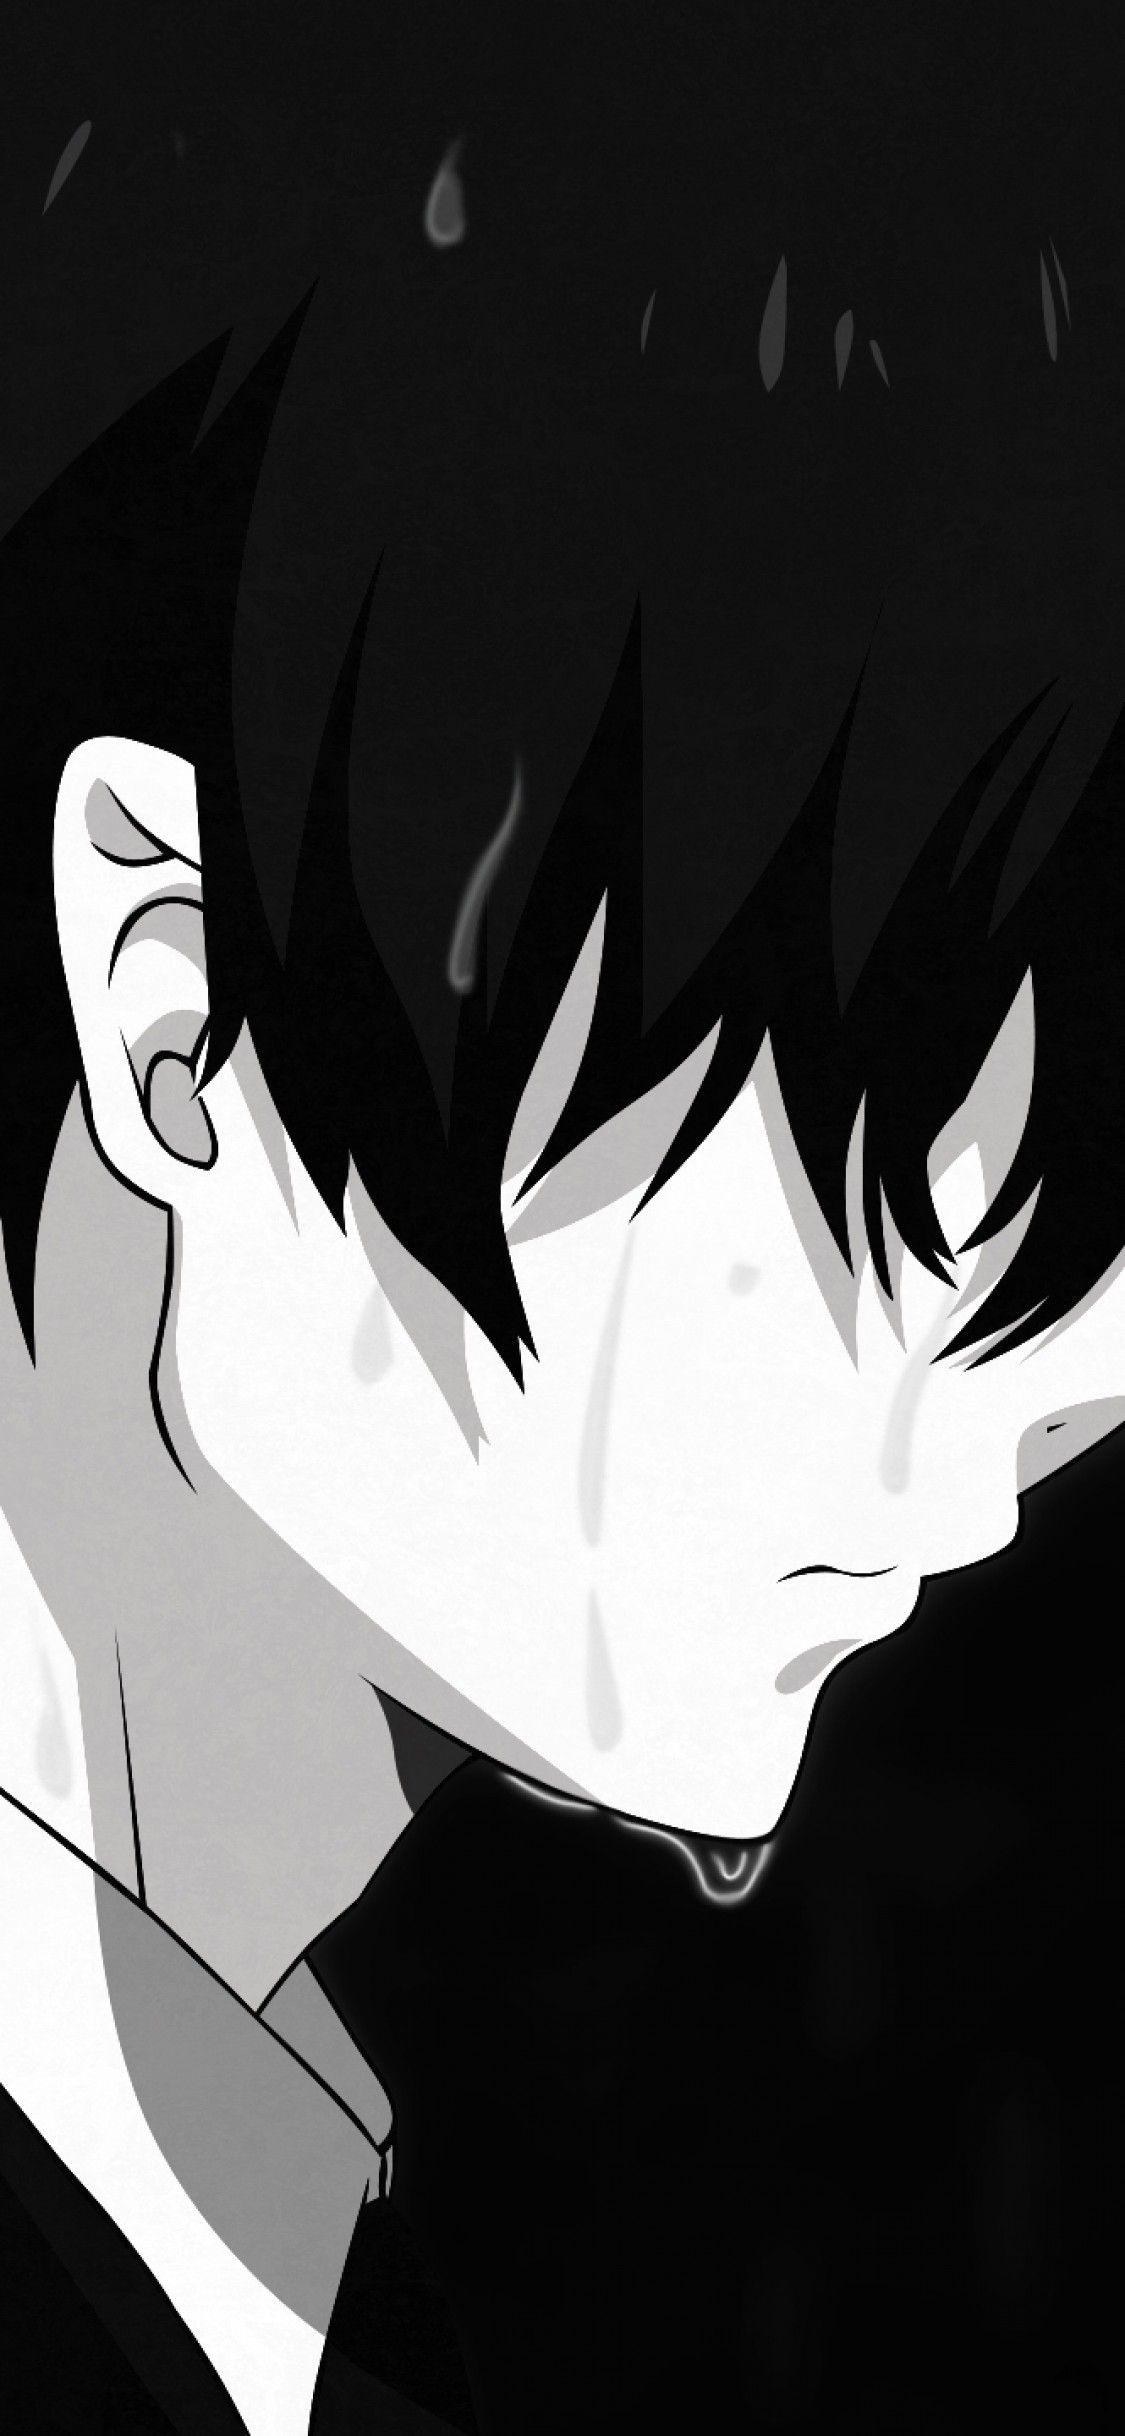 Sad Anime Black Wallpapers Top Free Sad Anime Black Backgrounds Wallpaperaccess 